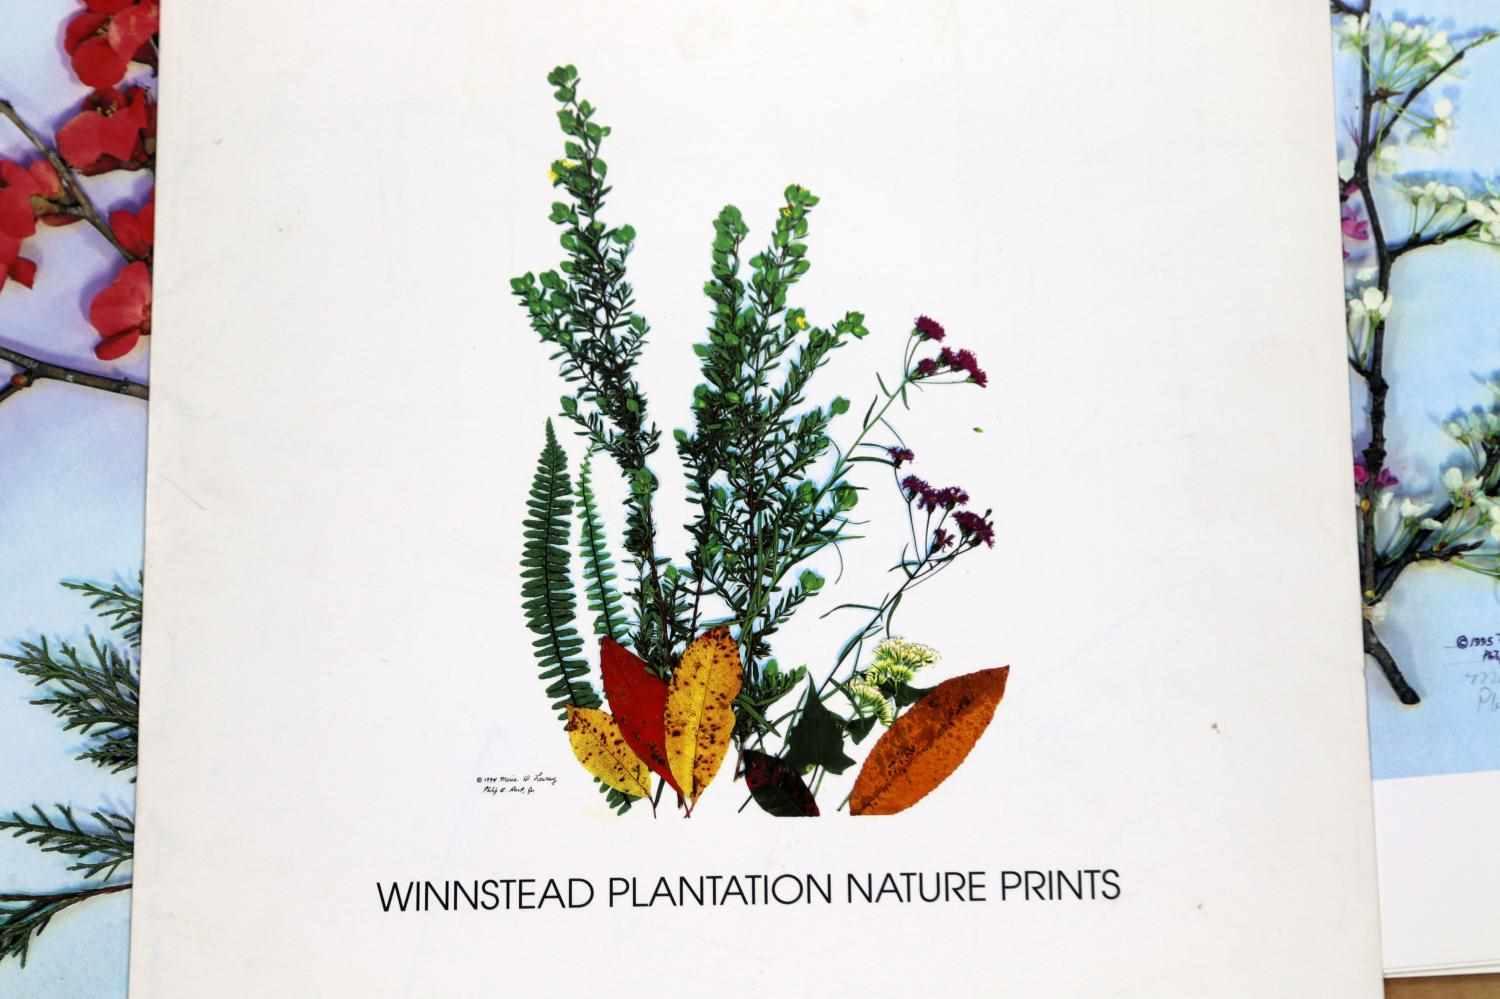 LOT OF 16 WINNSTEAD PLANTATION NATURE PRINTS